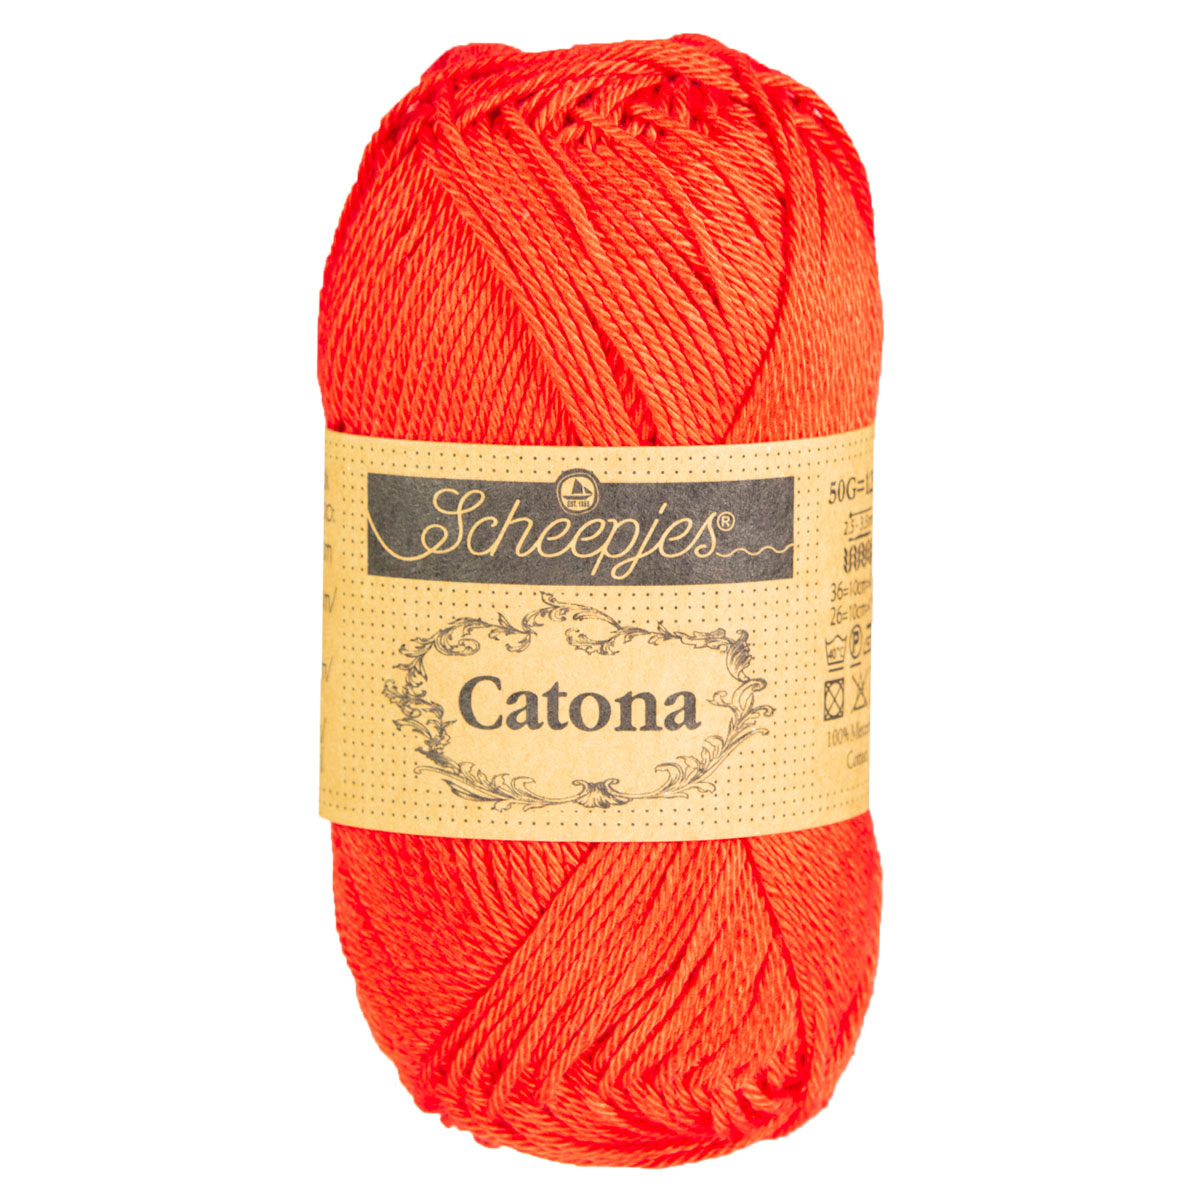 Scheepjes Catona Yarn - 519 Fresia at Jimmy Beans Wool